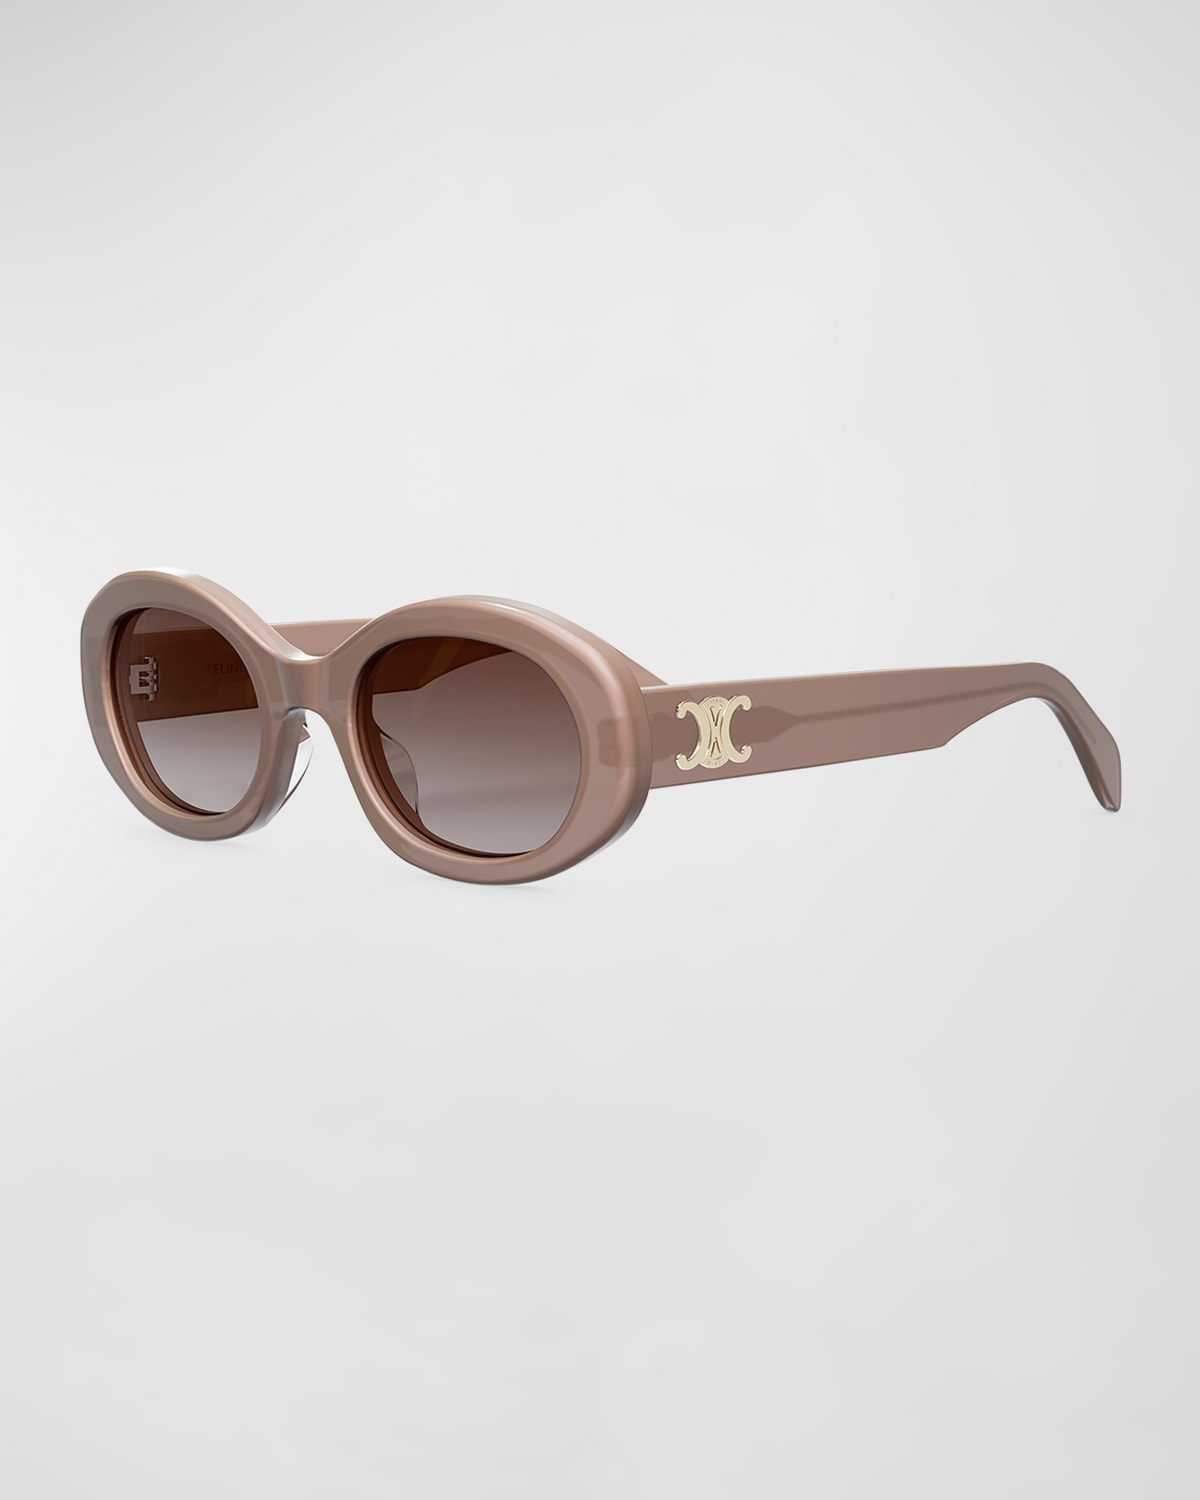 Celine Triomphe Logo Oval Acetate Sunglasses In Brown/brown Gradient